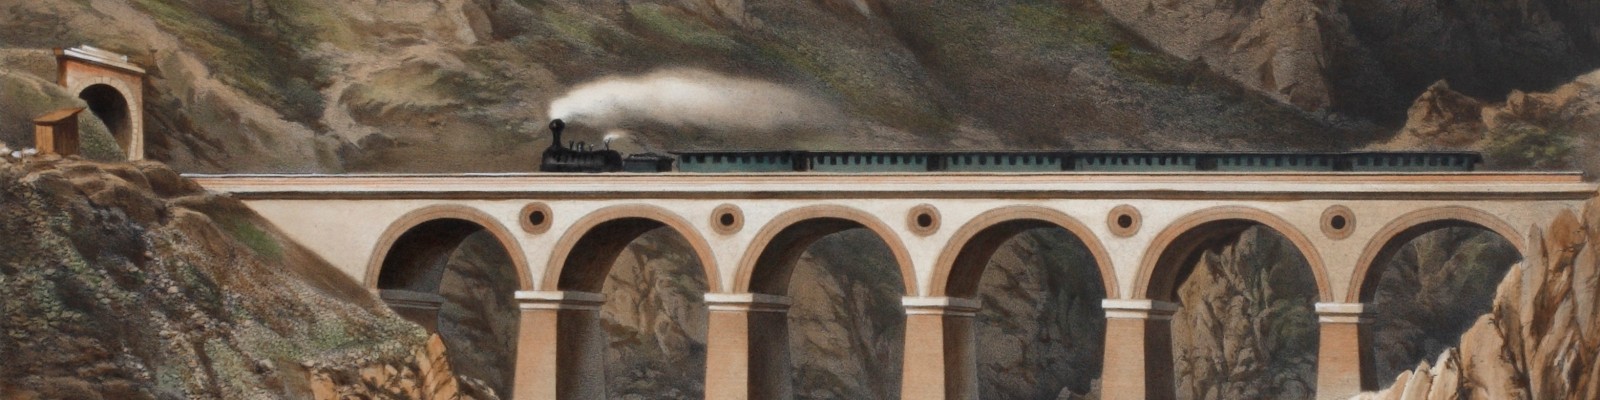 Imre Benkert: Viadukt über die Krausel-Klause, Farblithografie, 1854